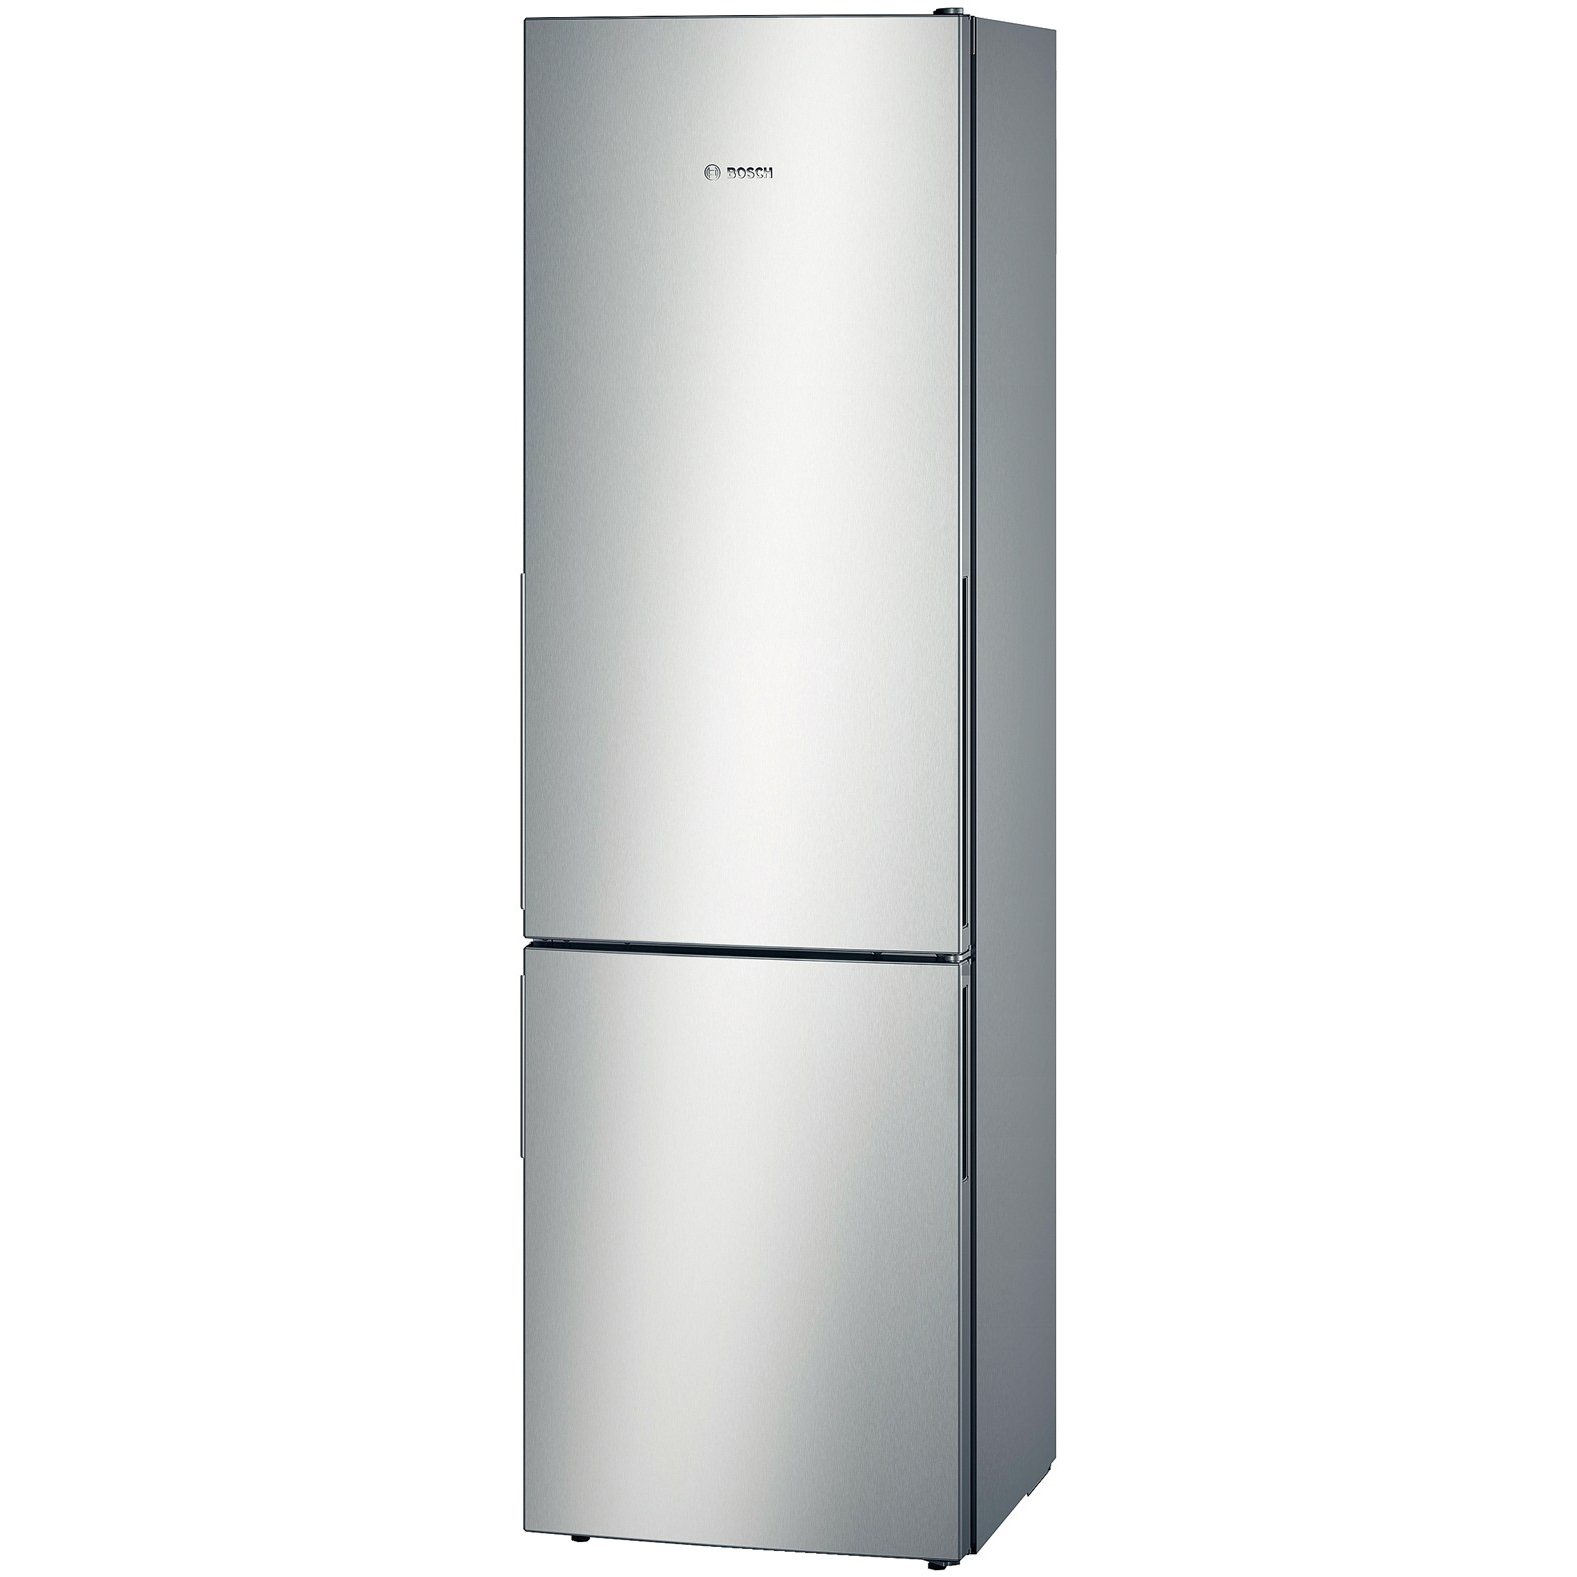  Combina frigorifica Bosch KGE39BL41, 339 l, Clasa A+++, Inox 